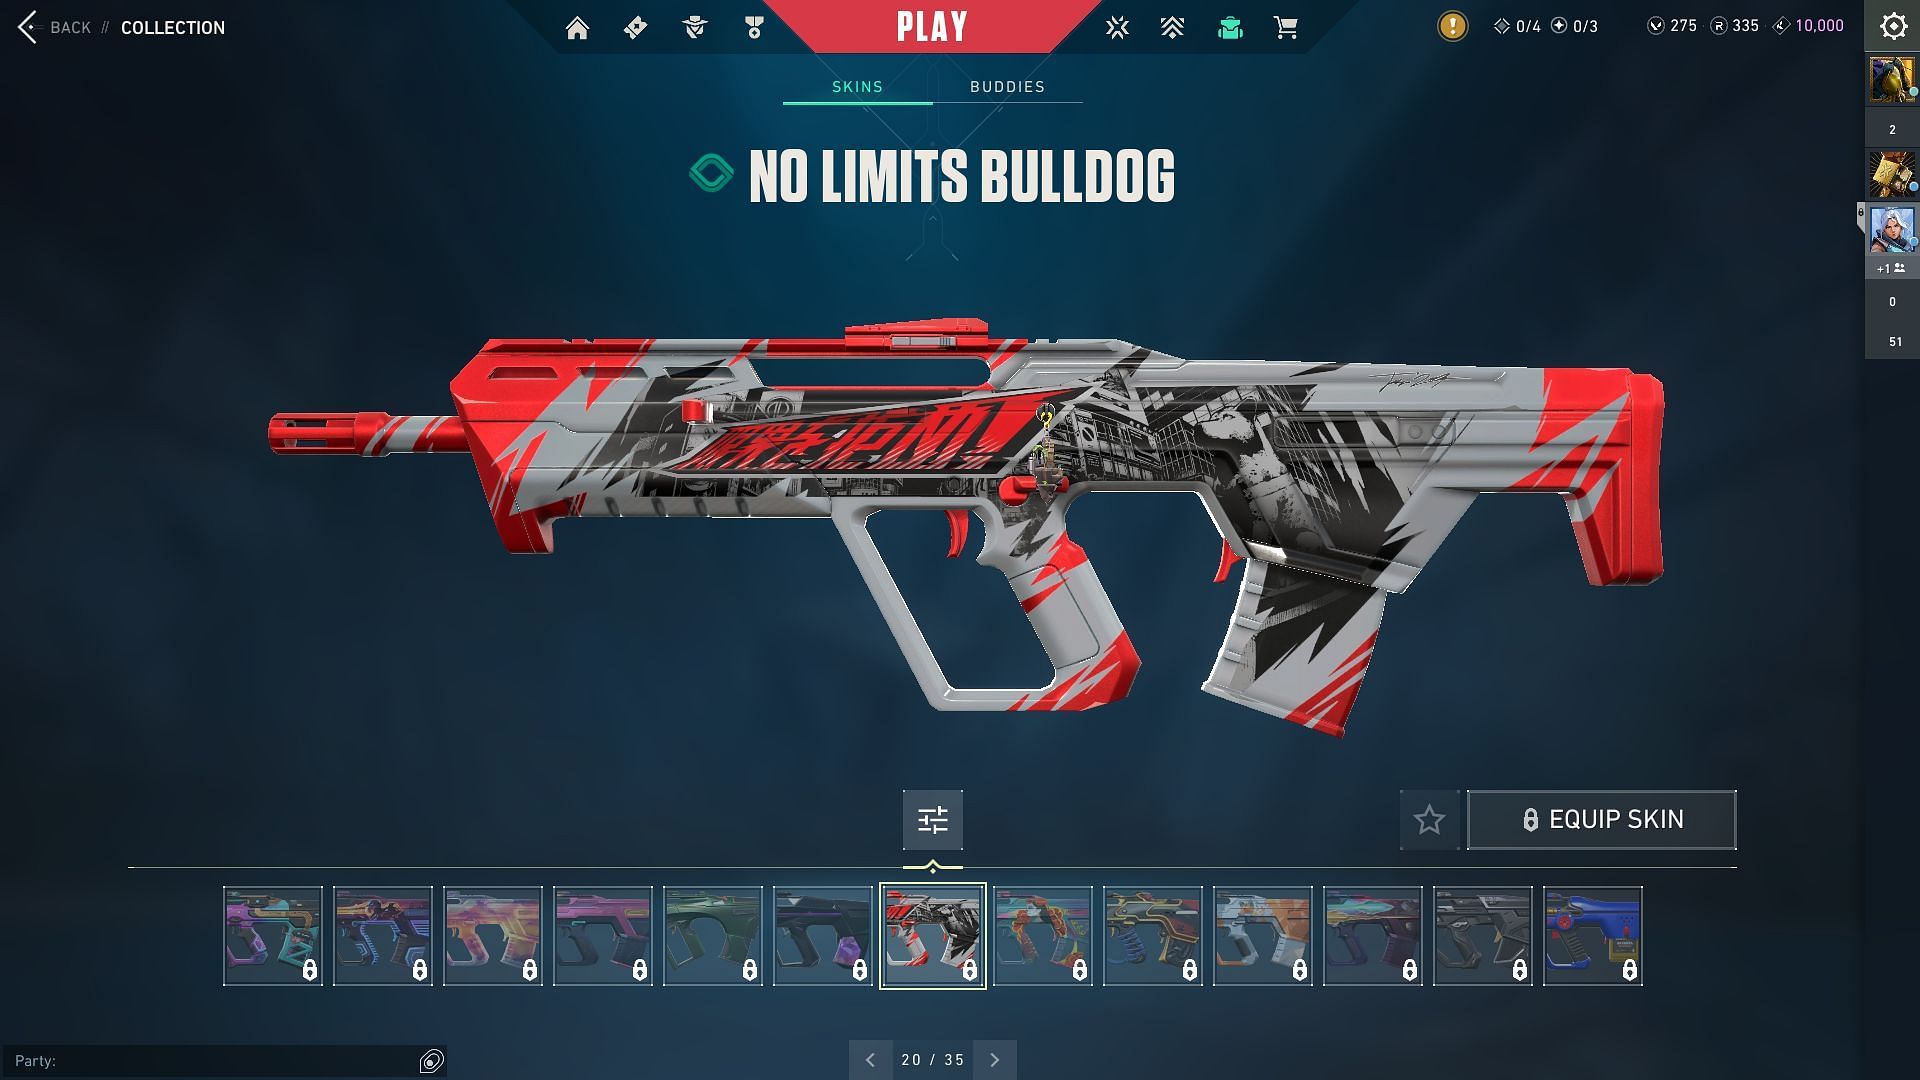 No Limits Bulldog (Image via Sportskeeda and Riot Games)